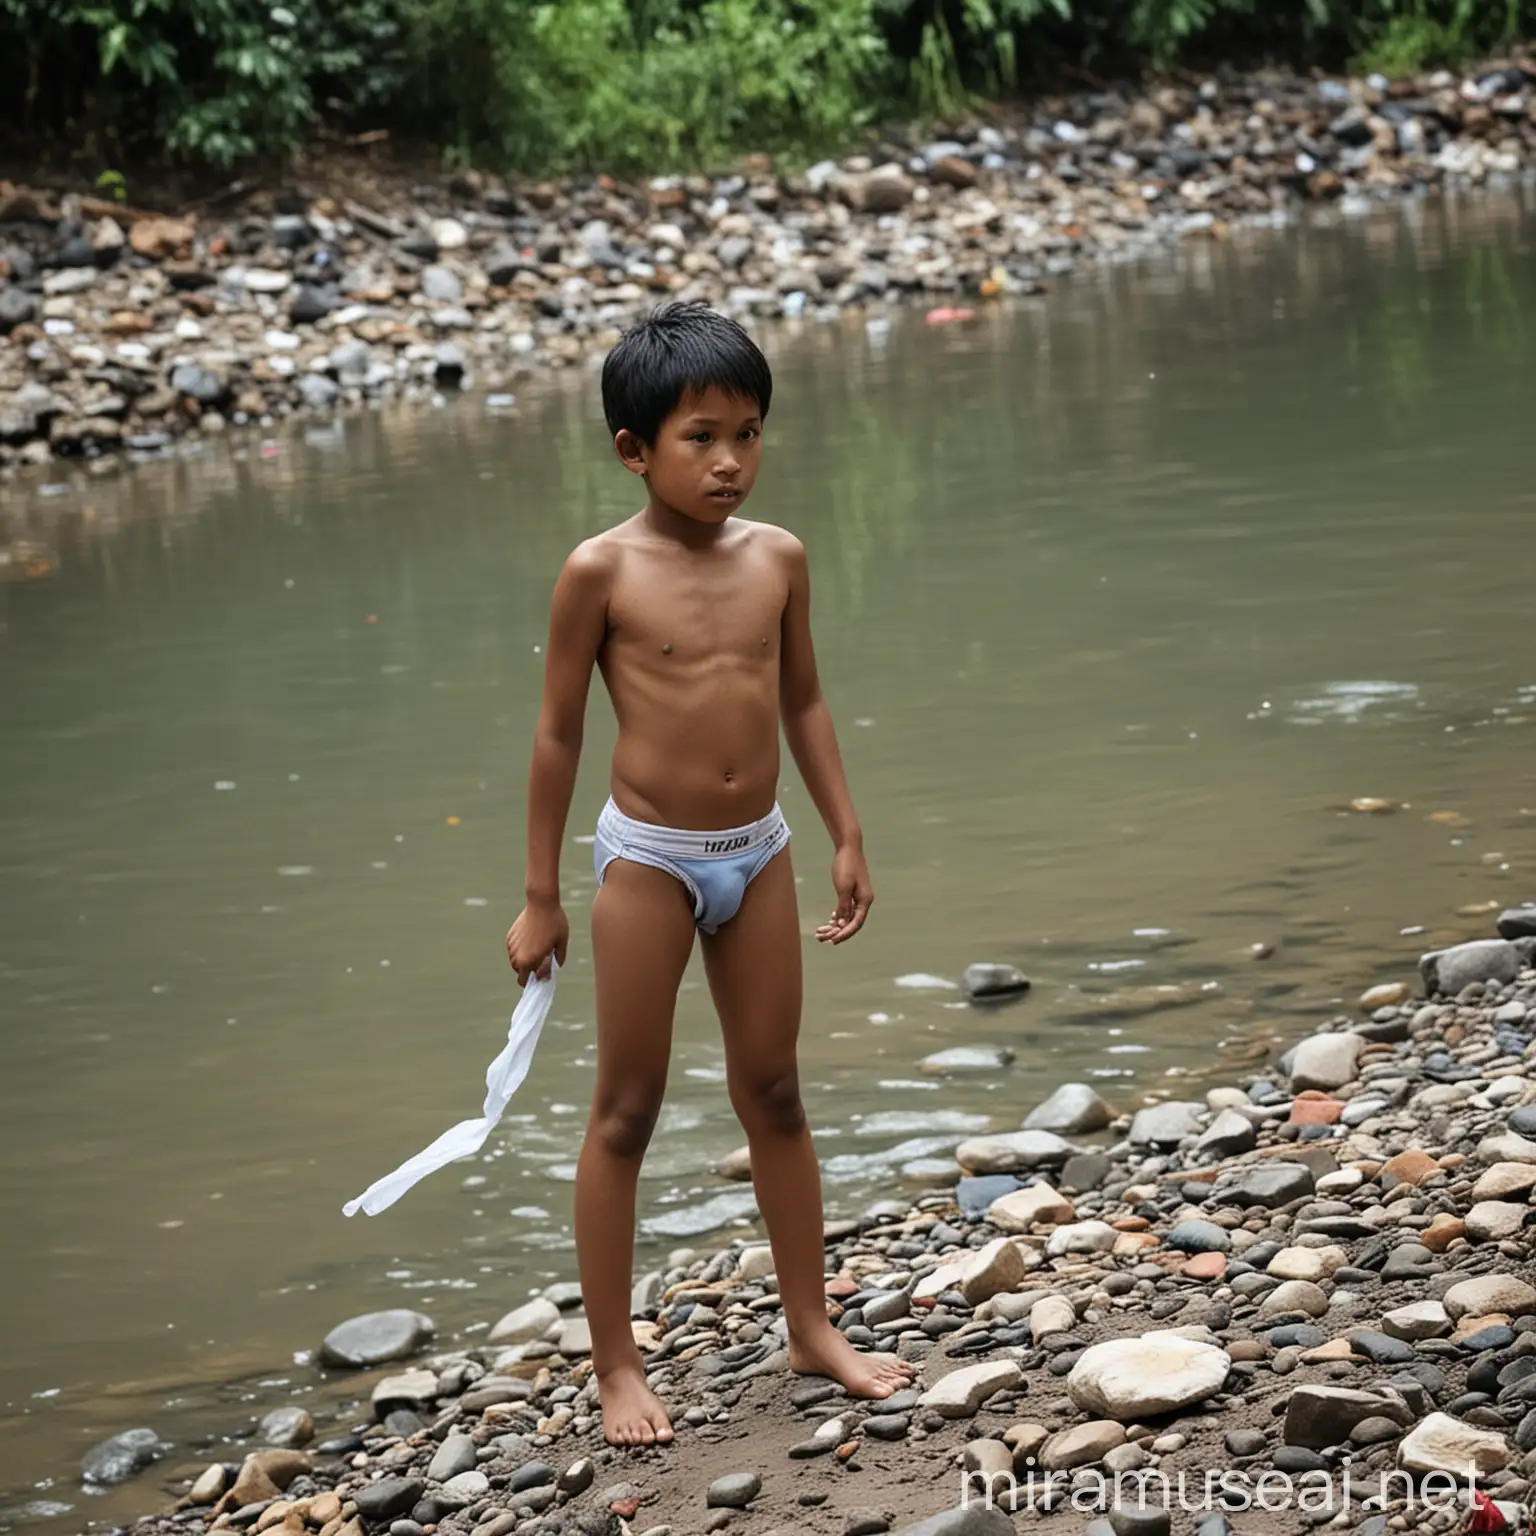 Anak Indonesia Umur 11 Tahun Laki Laki Memakai Celana Dalam, Sedang Kencing Di Sungai